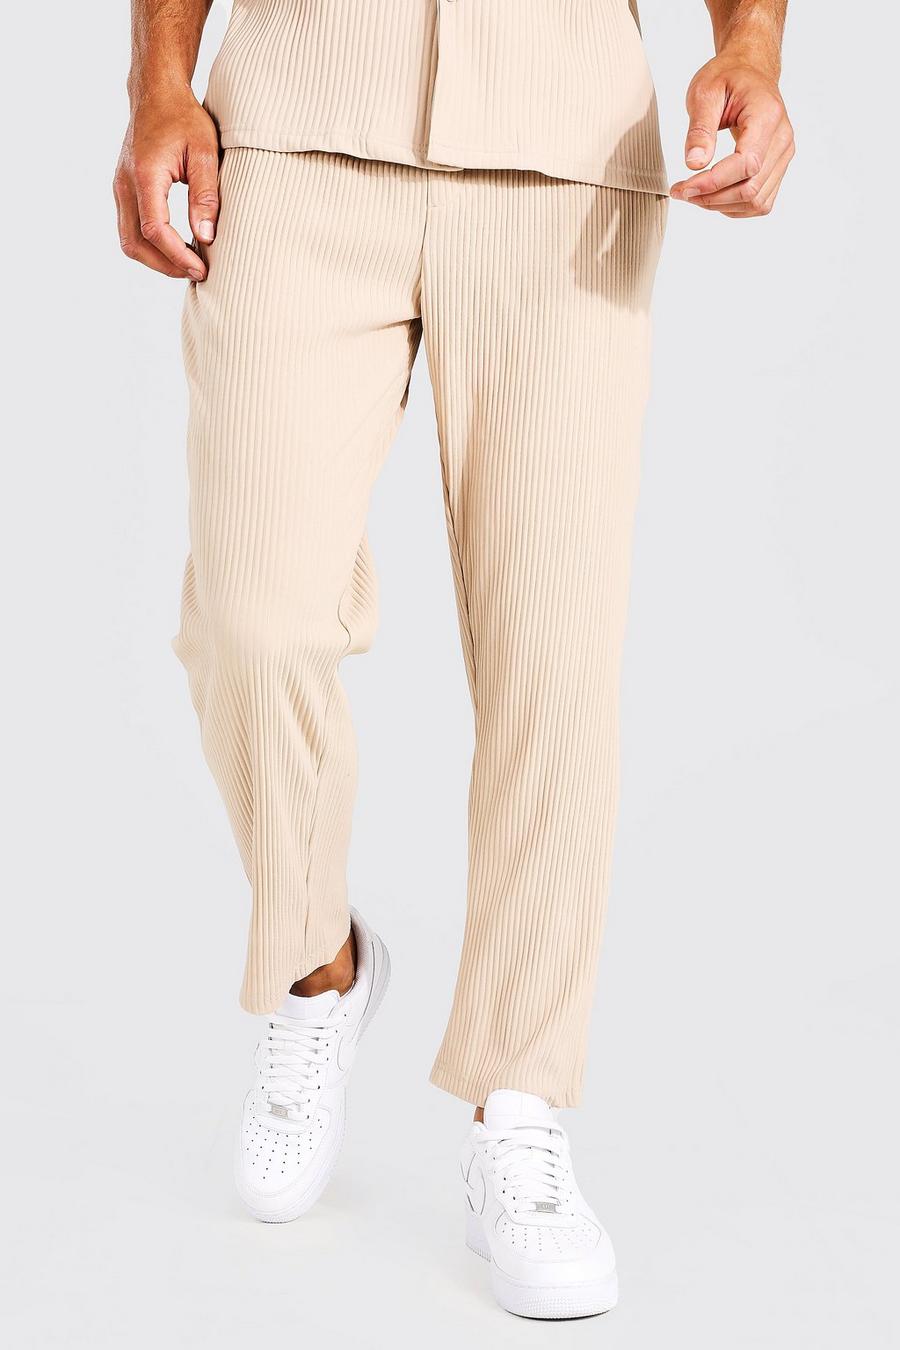 Tall - Pantalon court slim plissé, Taupe beige image number 1